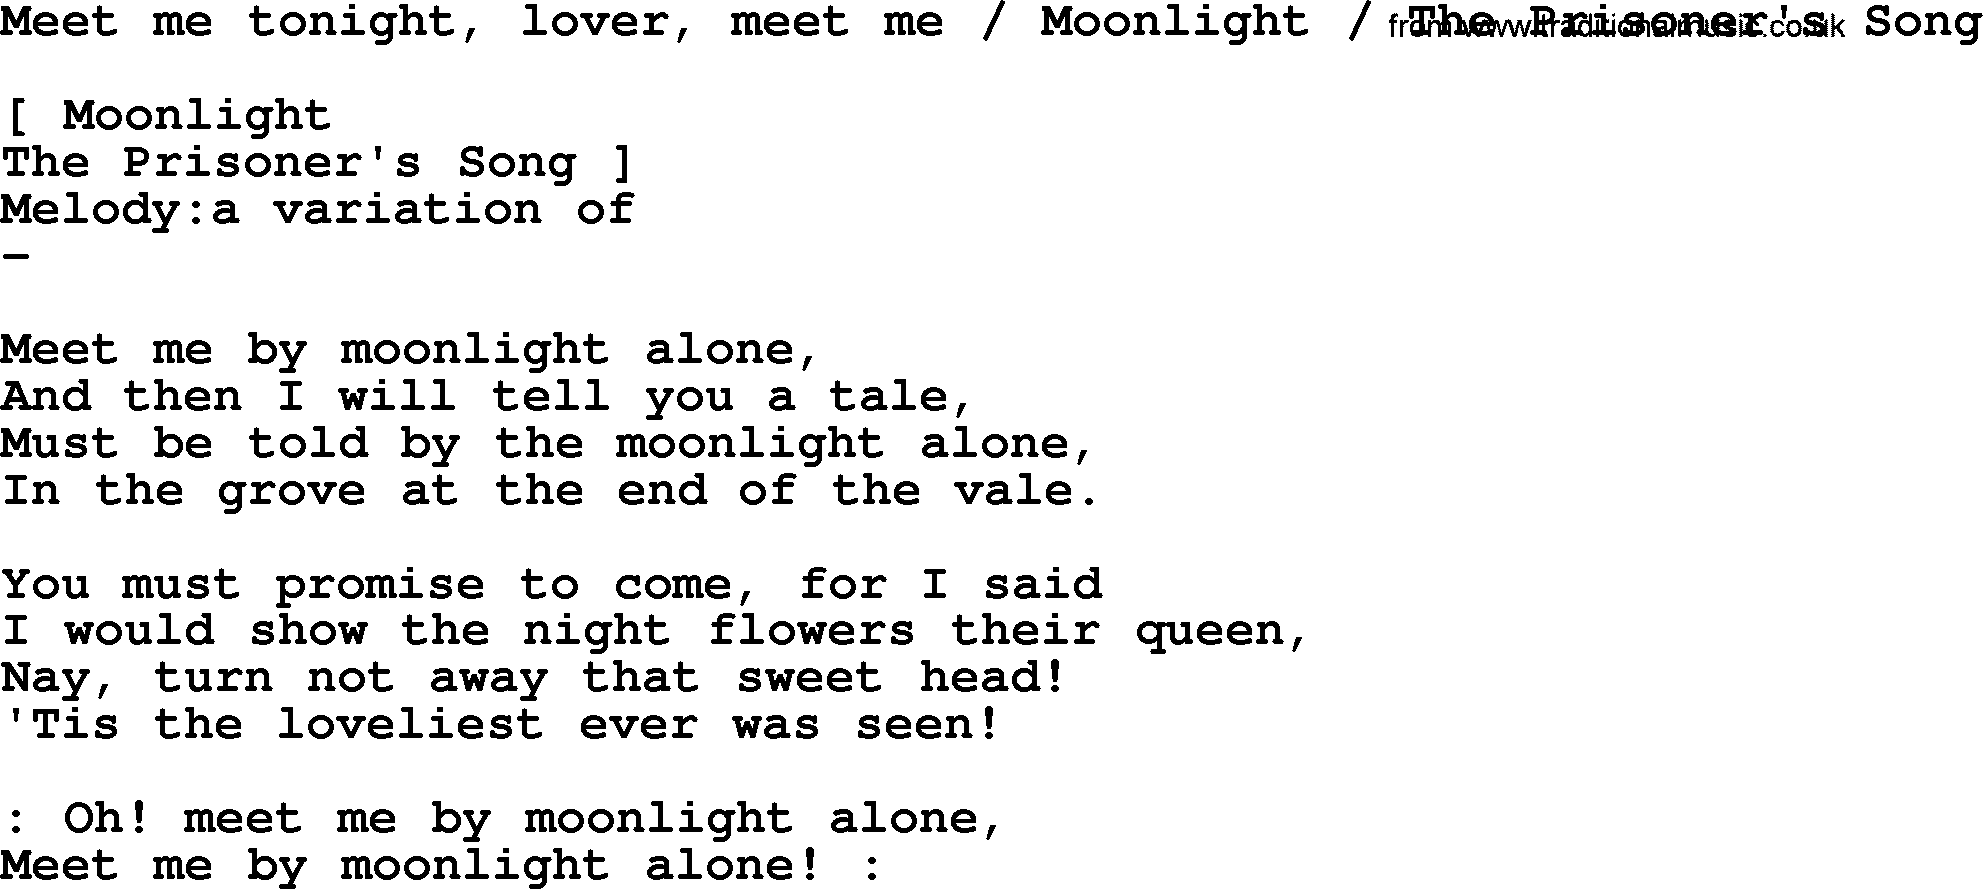 Old American Song: Meet Me Tonight, Lover, Meet Me  Moonlight  The Prisoner's Song, lyrics